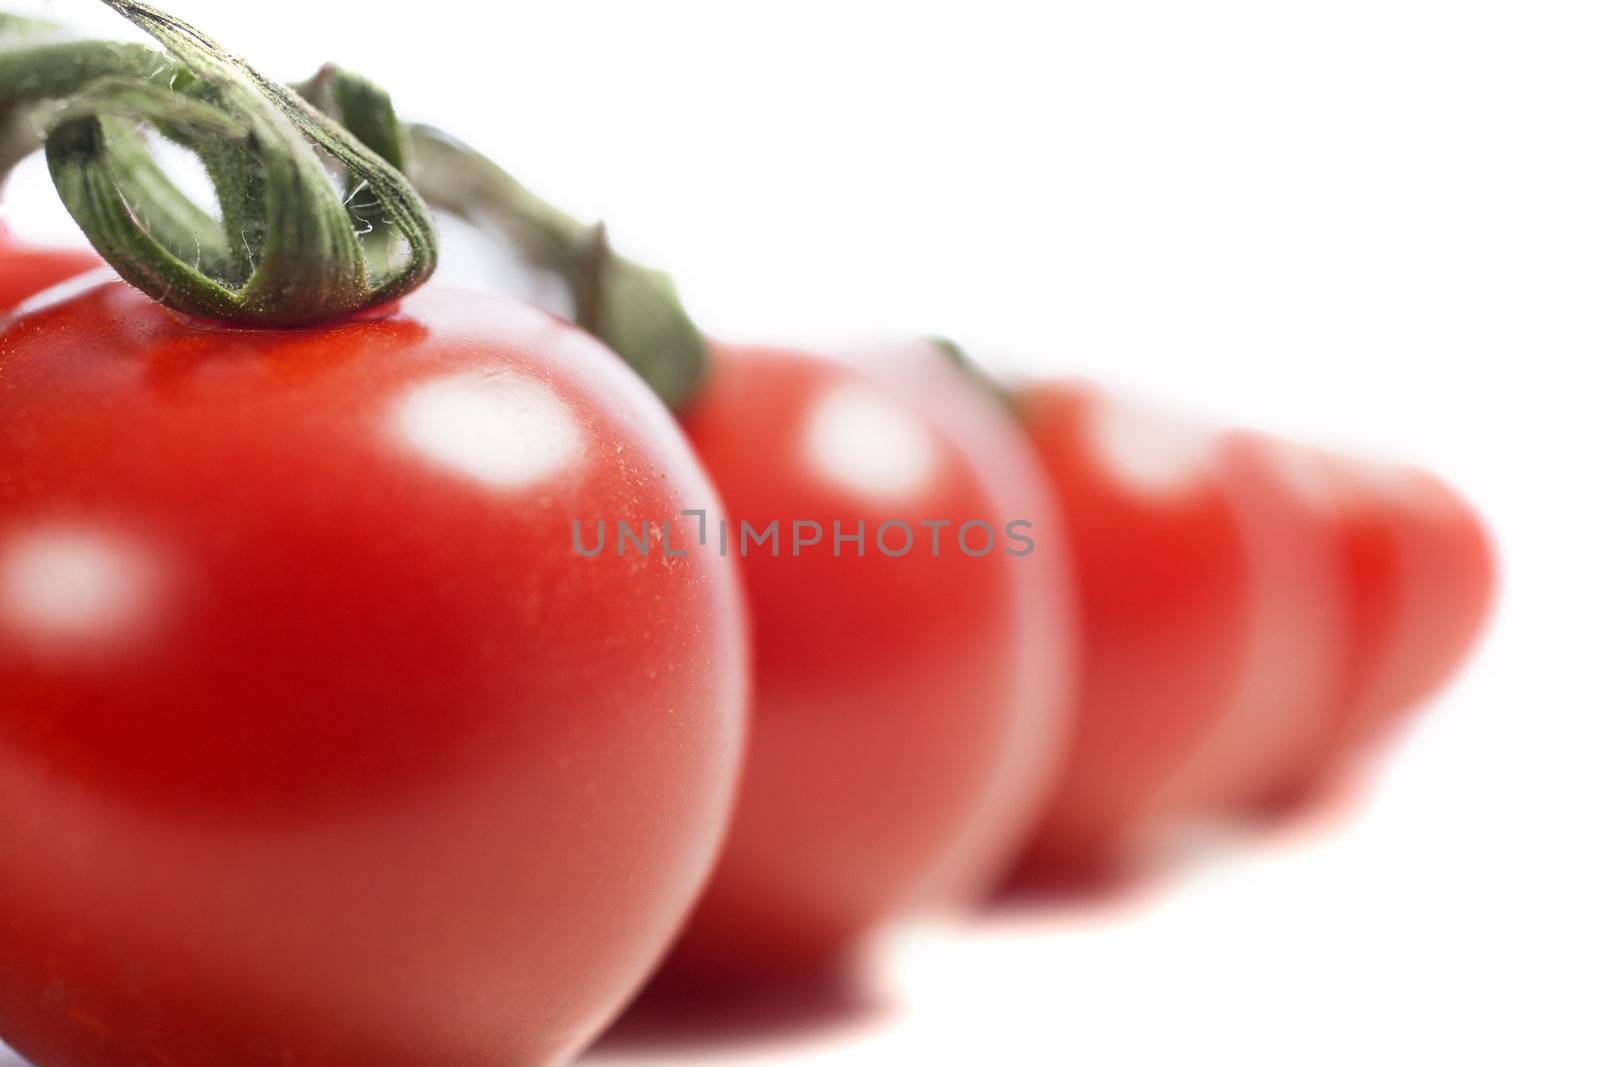 Tomatoes on the vine by studiofi